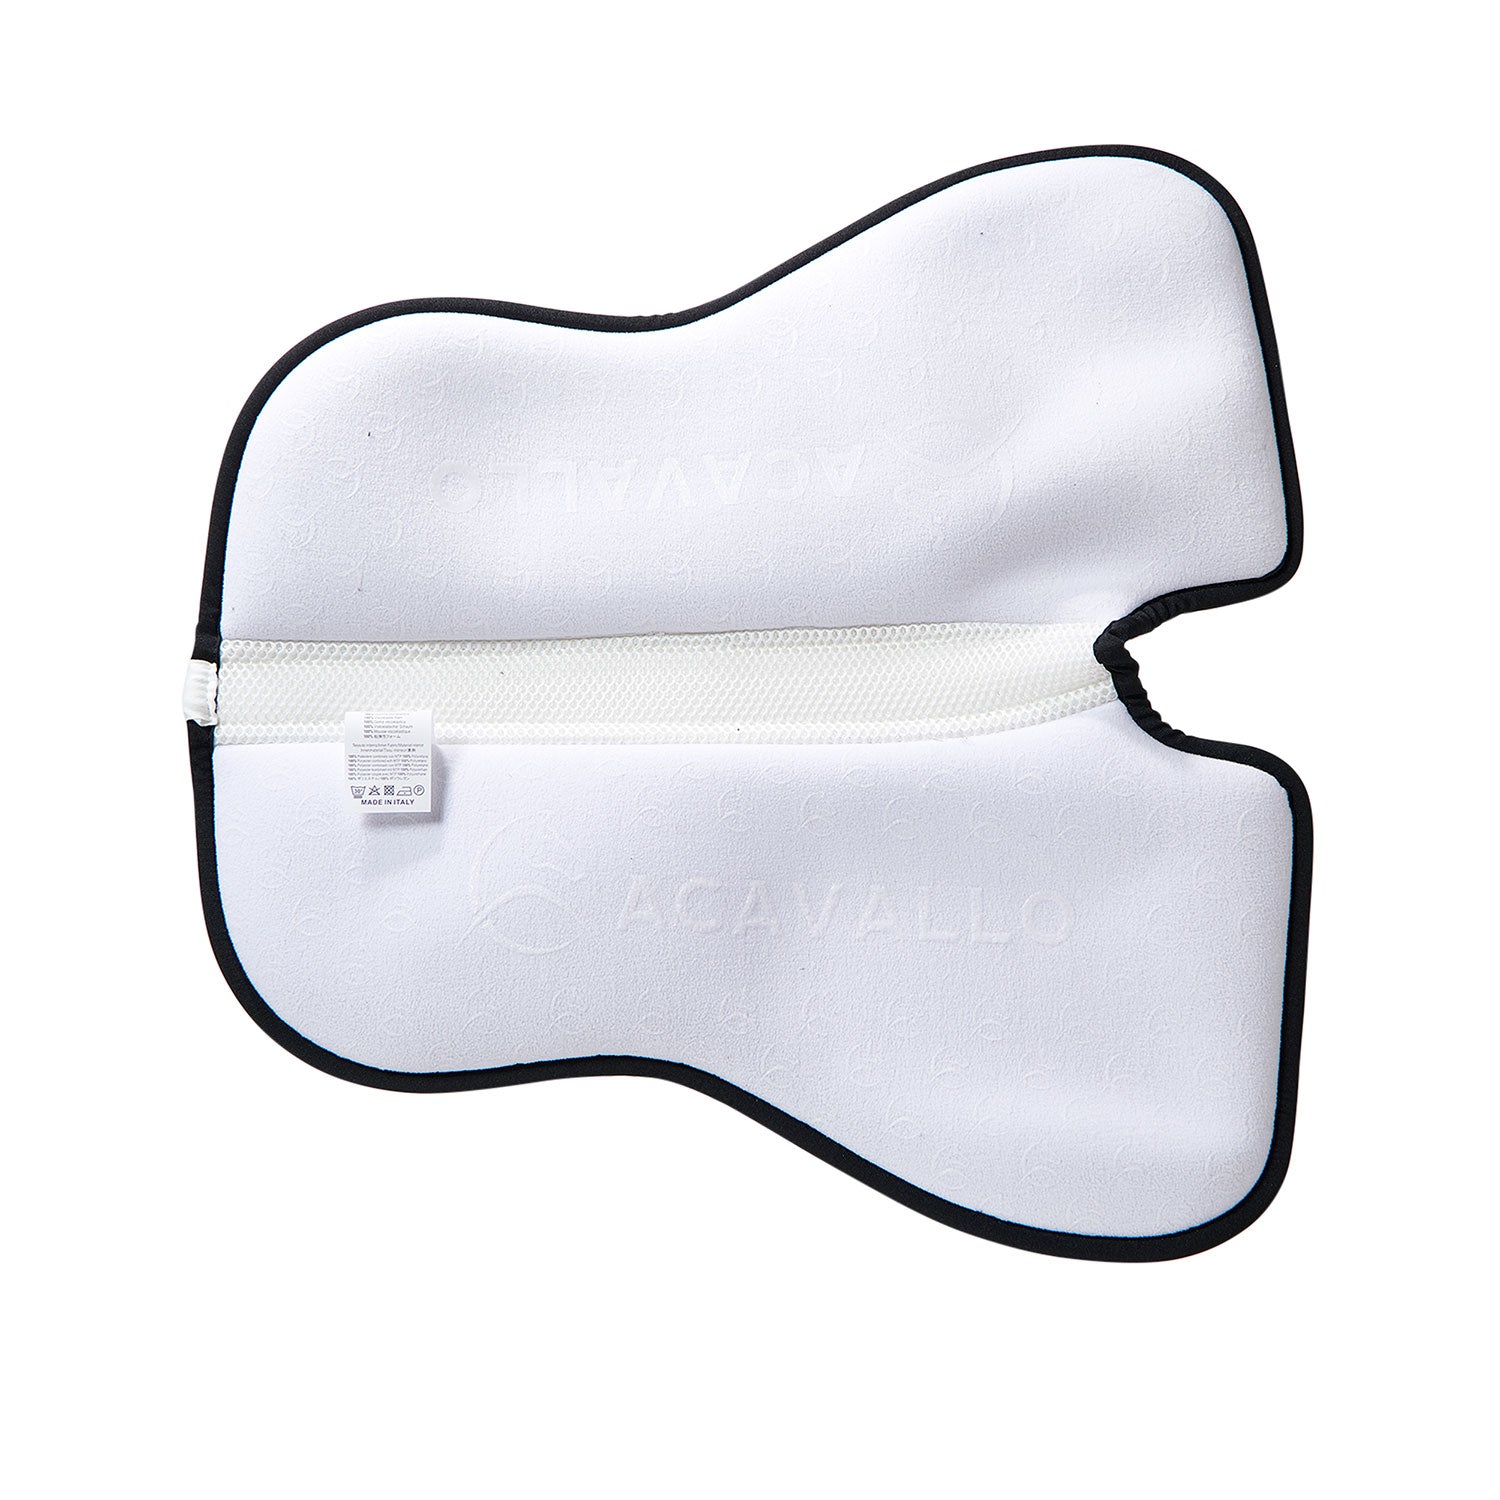 White memory foam saddle pad for dressage